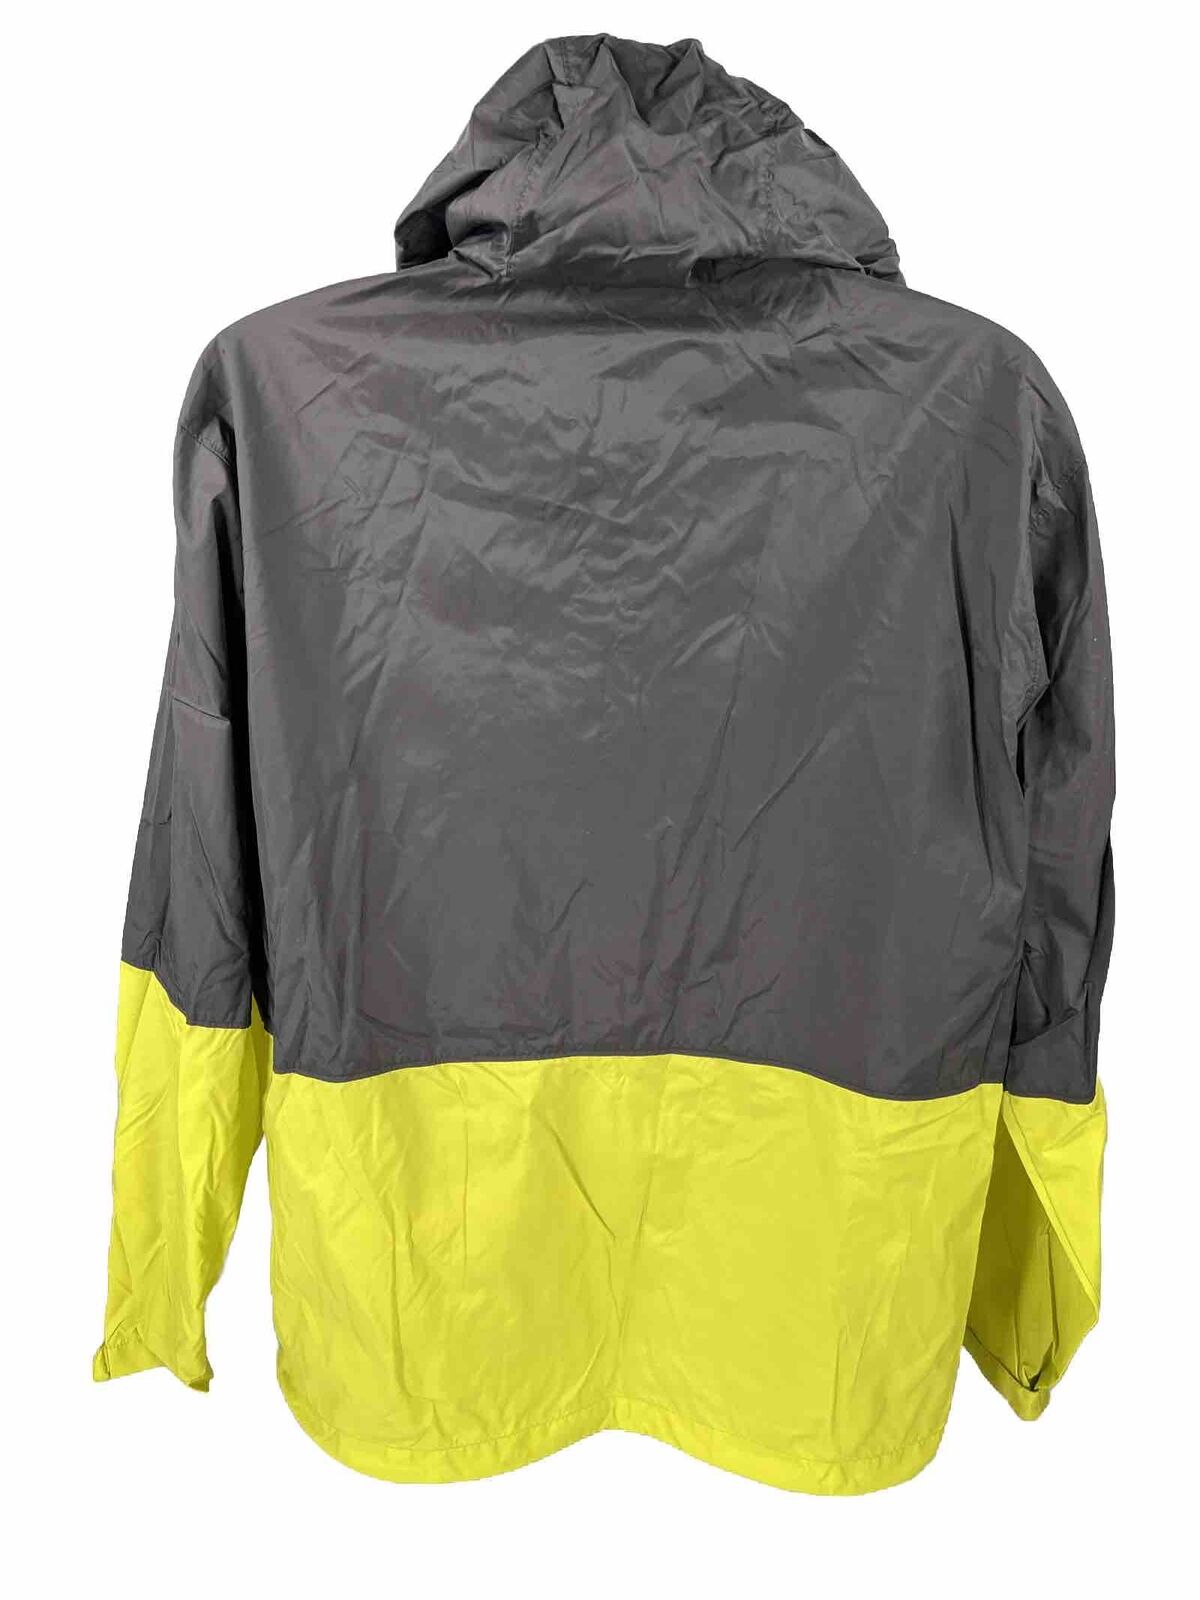 Columbia Men's Gray/Green Roan Mountain Full Zip Rain Jacket - L